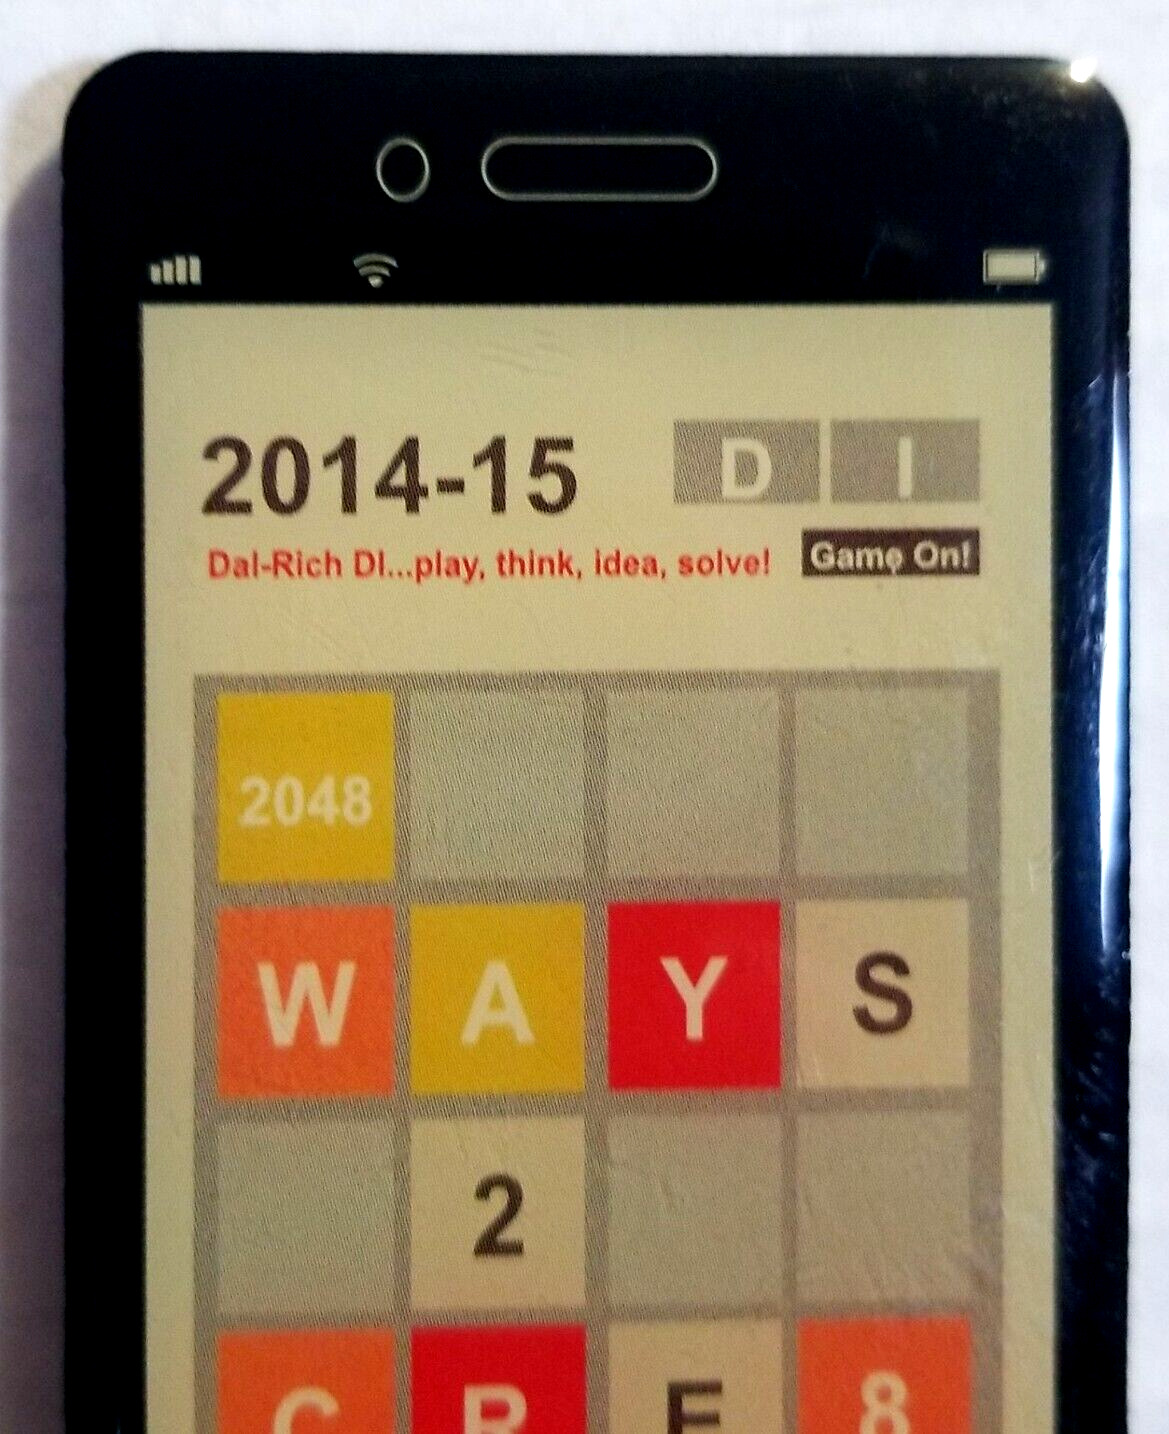 Destination Imagination Pin💥 2014-15 Cell Phone Ways 2 Cre8 DAL-RICH DI 💥OM143